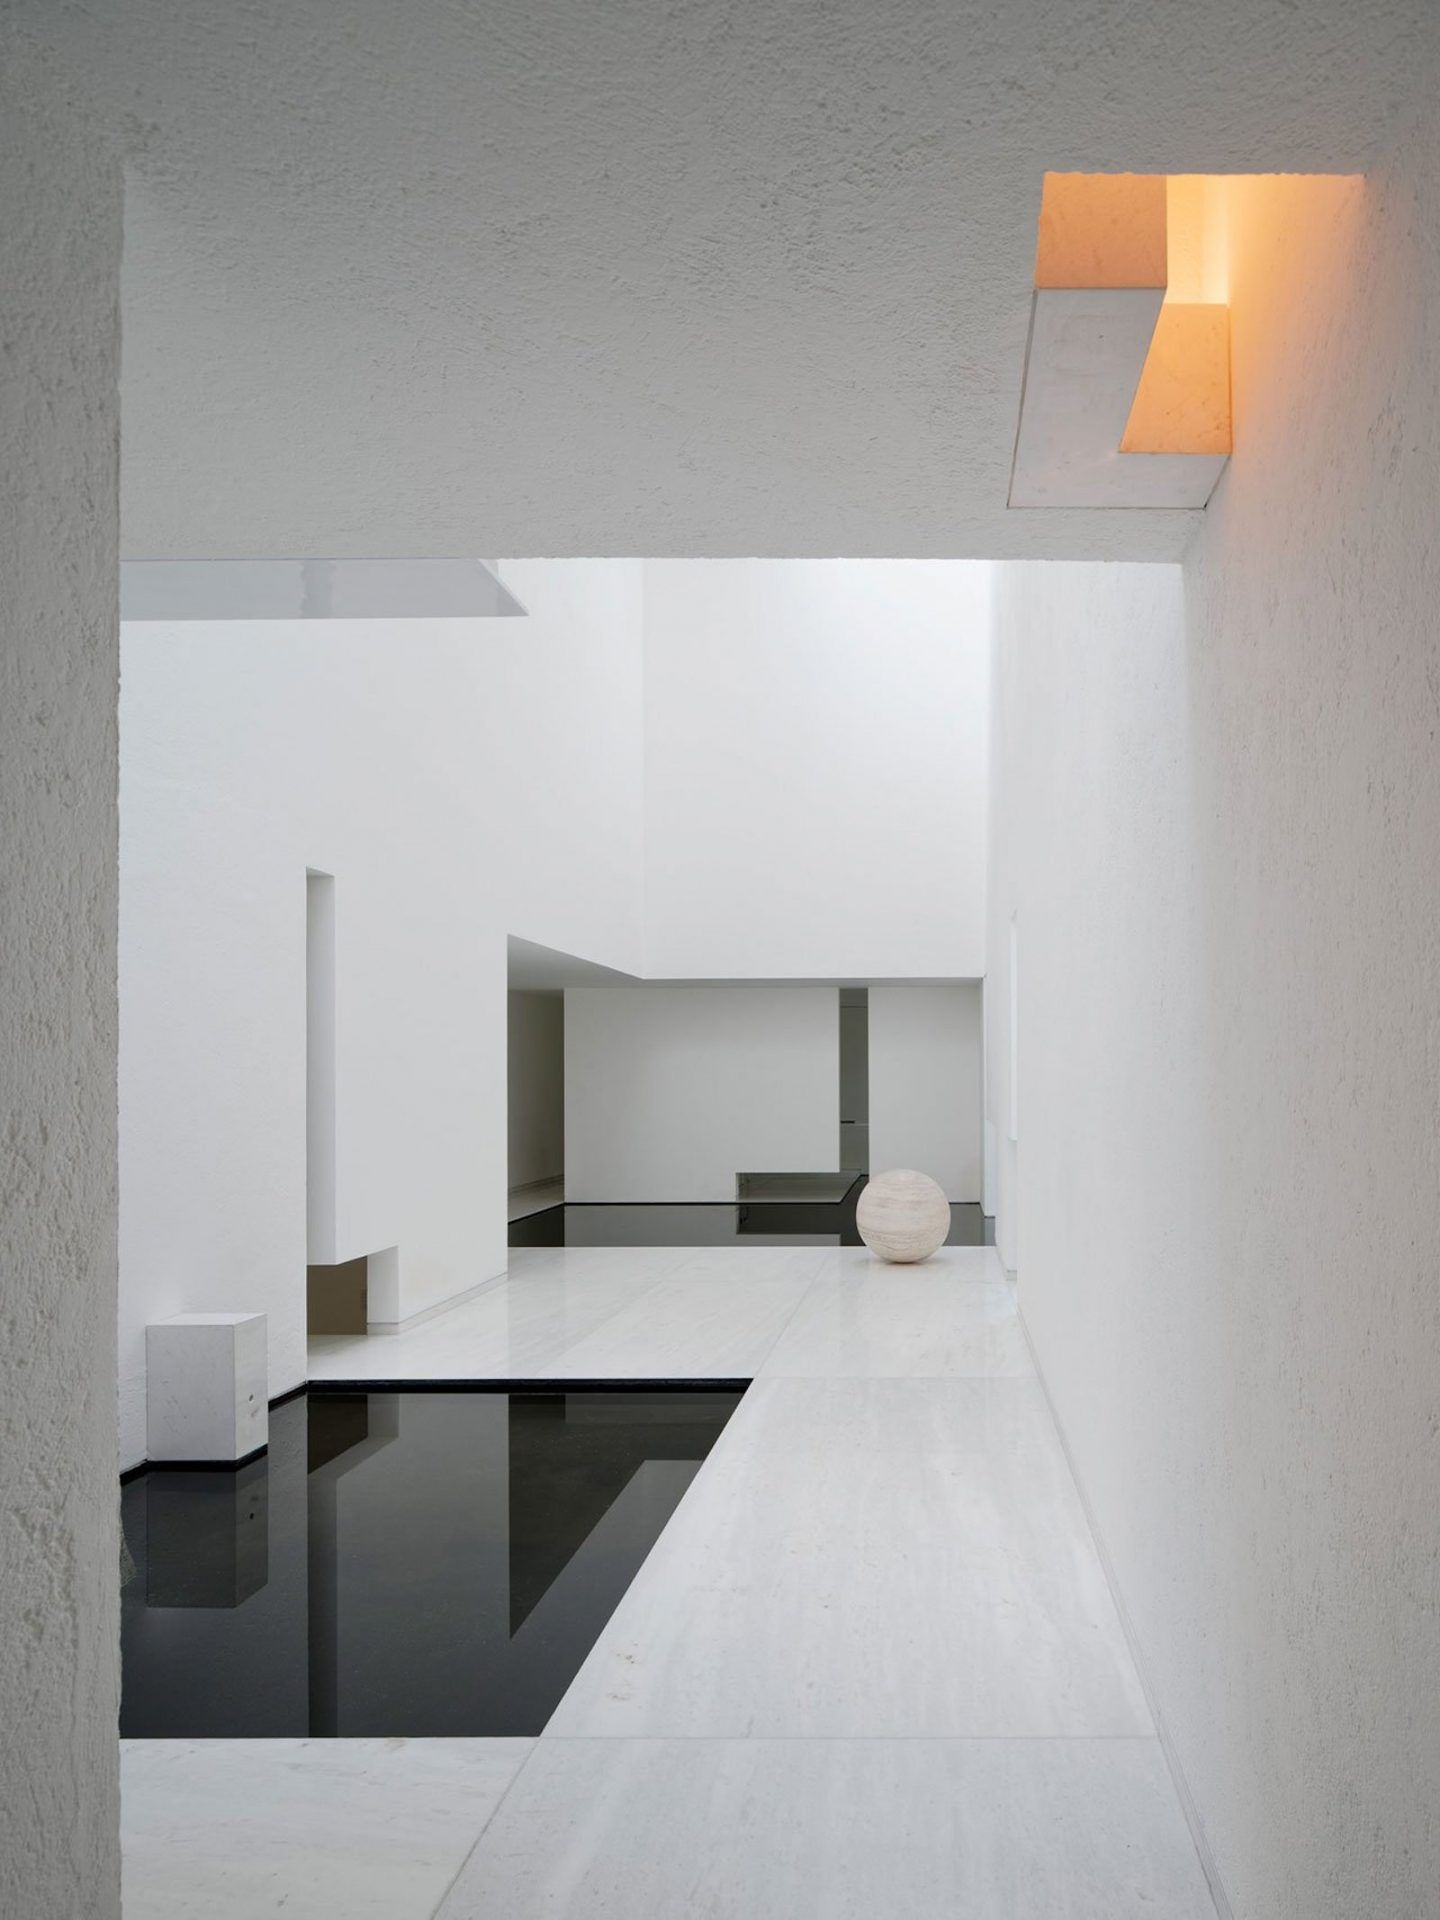 IGNANT-Architecture-Miguel-Ángel-Aragone-Rombo-IV-001